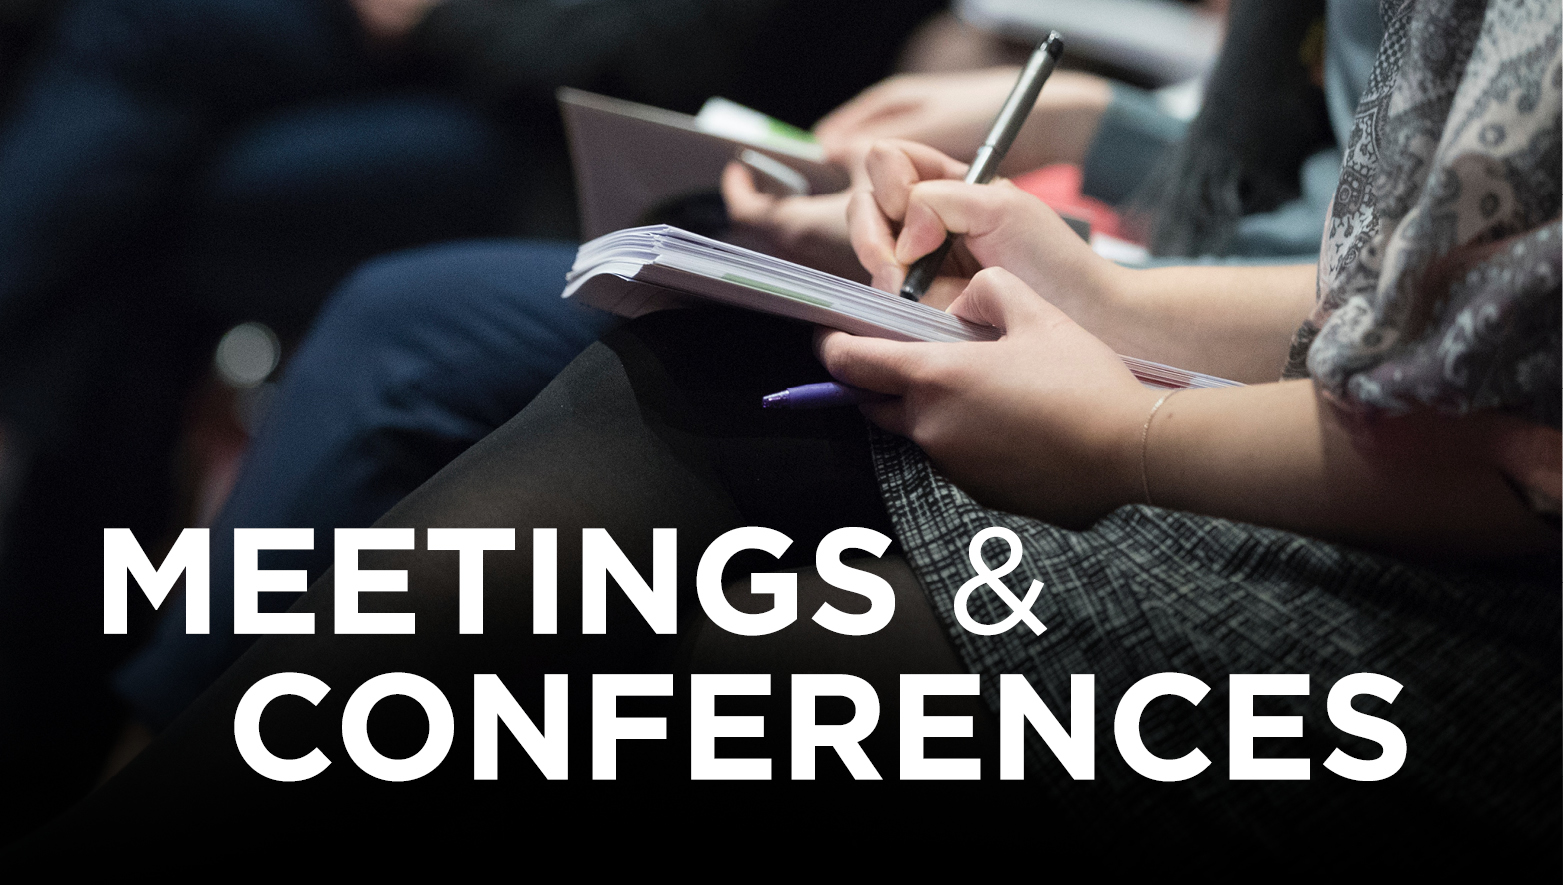 Meetings & Conferences thumbnail image